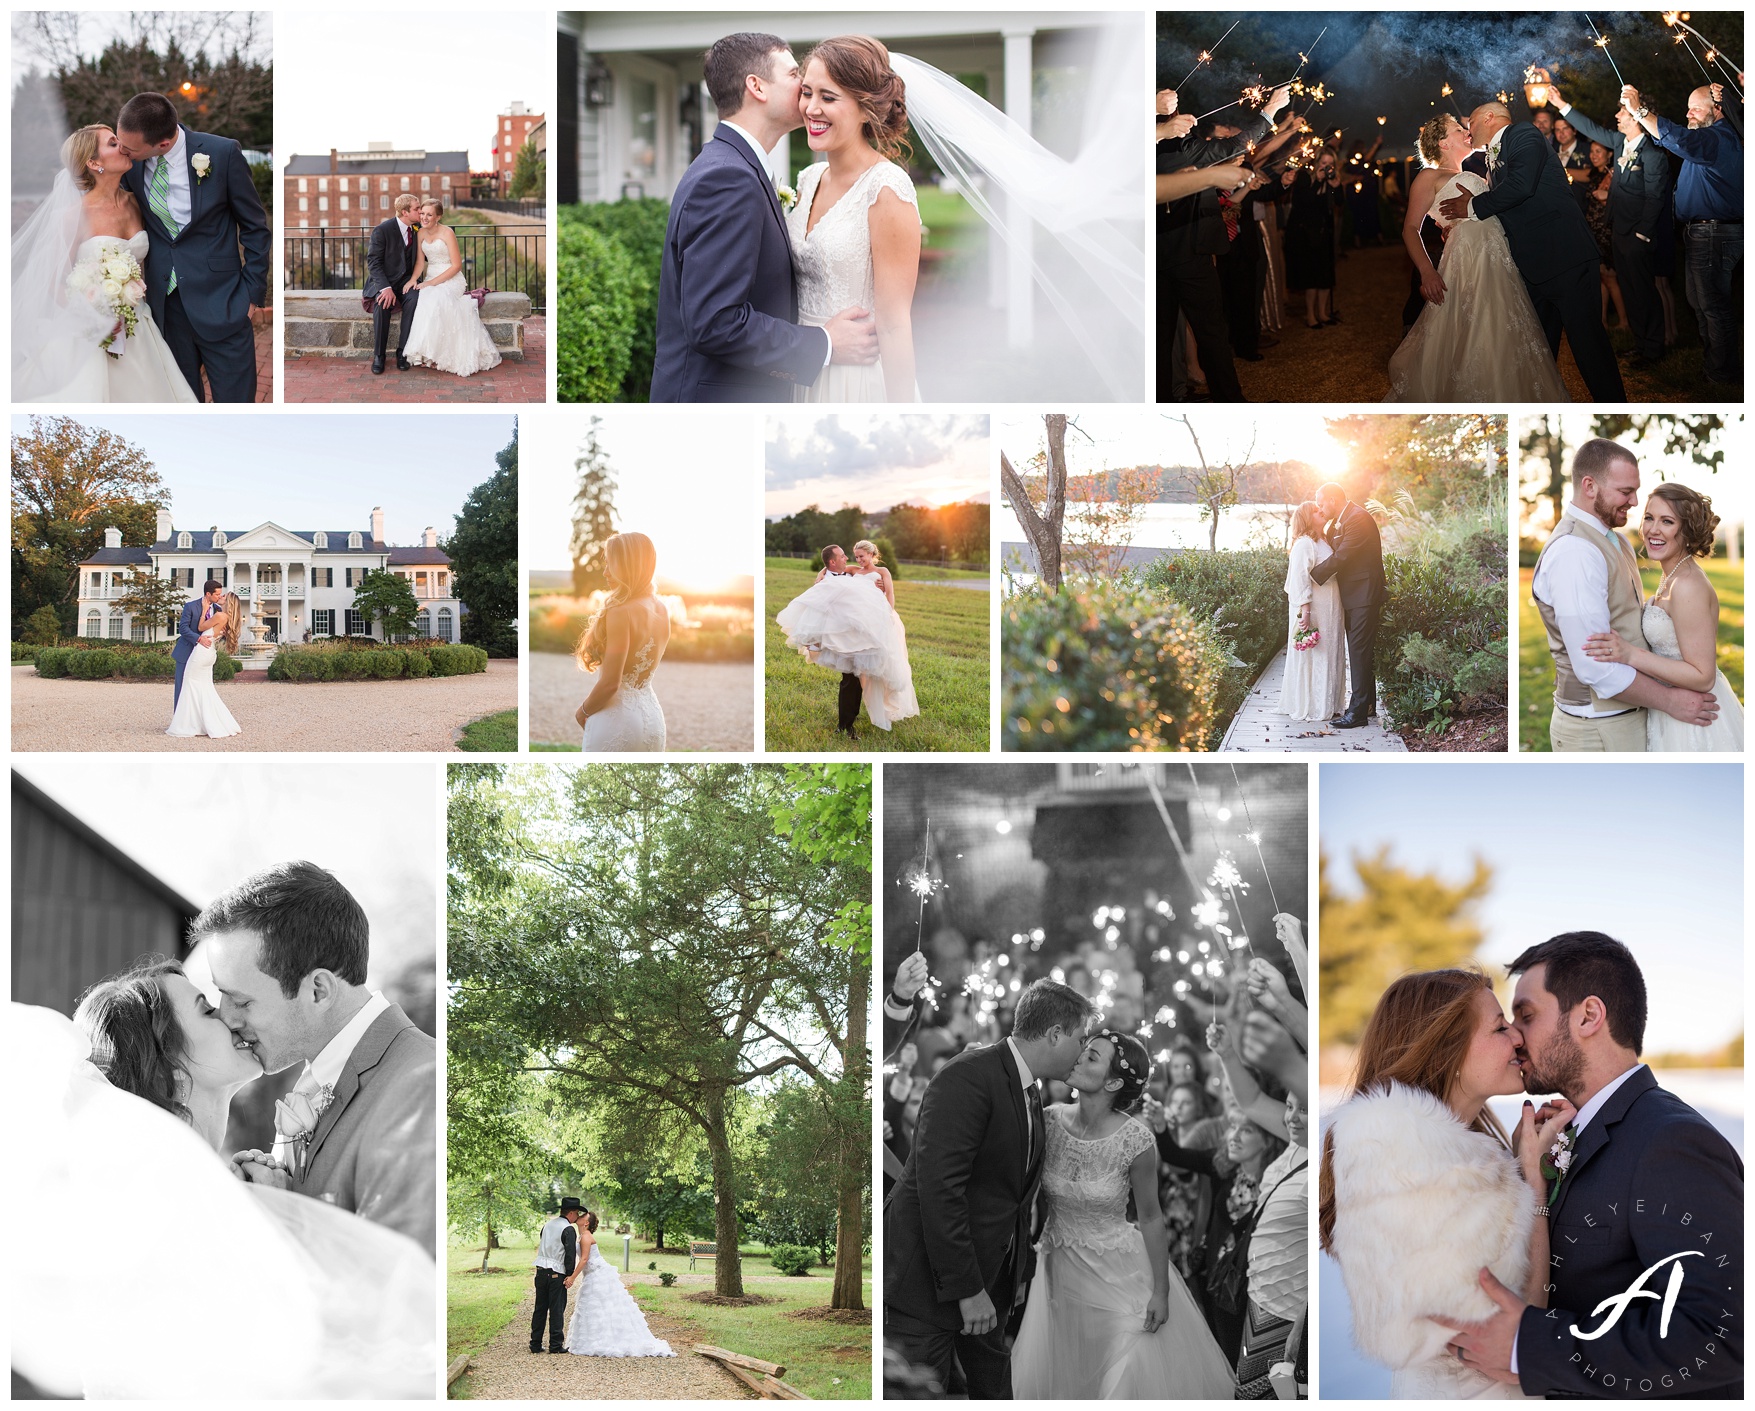 Lynchburg and Charlottesville Wedding Photographer | Central Virginia Wedding Photographers || www.ashleyeiban.com